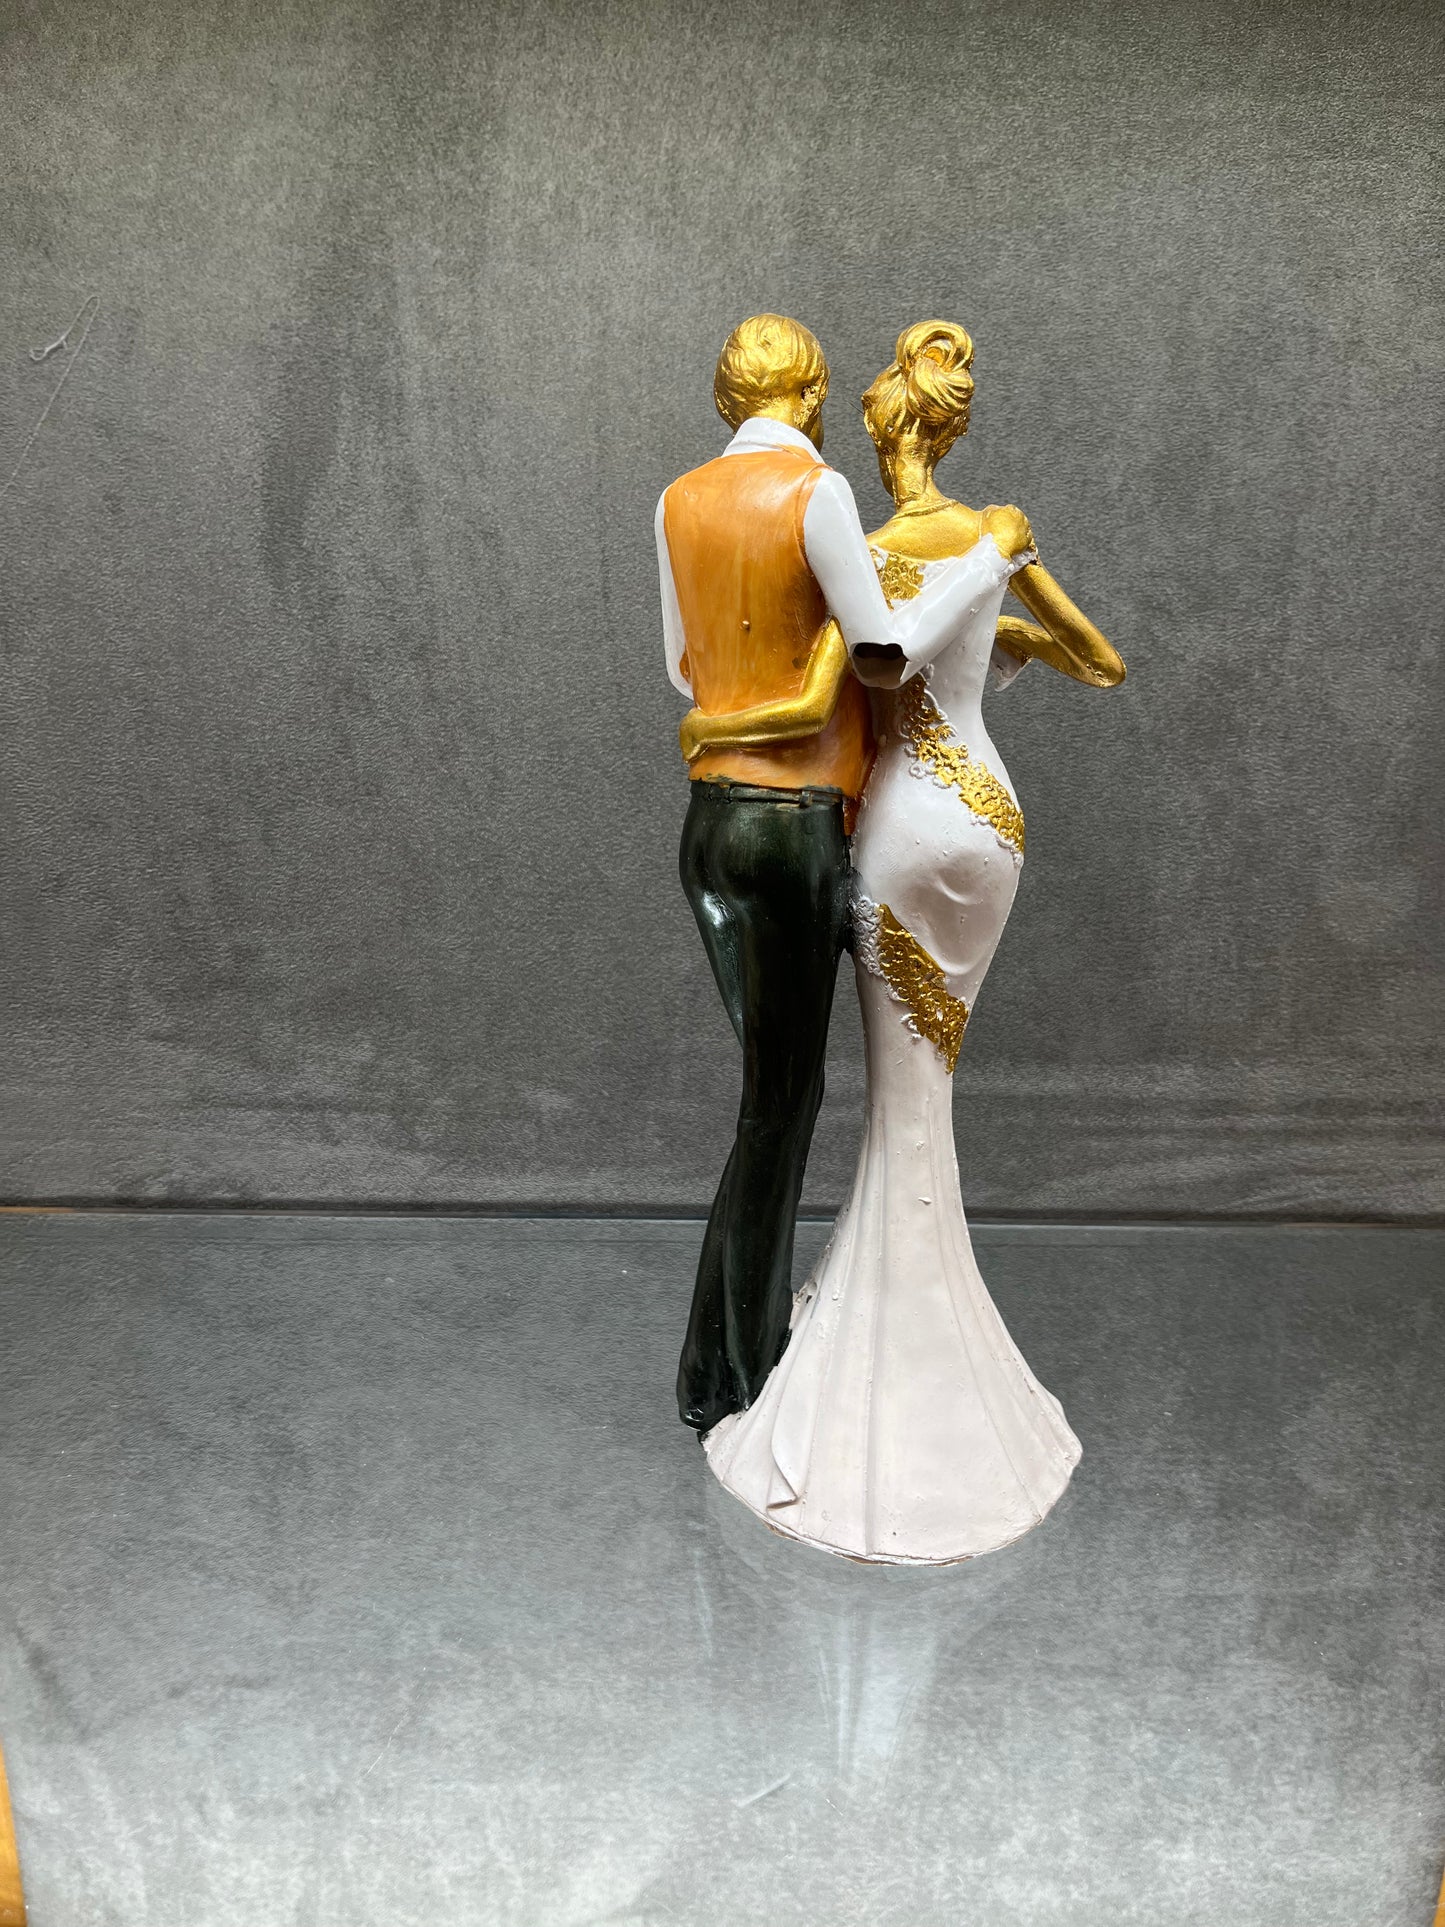 Sweetheart Statues, Romantic Love, Valentine, Wedding Anniversary Gift - HighTouch 